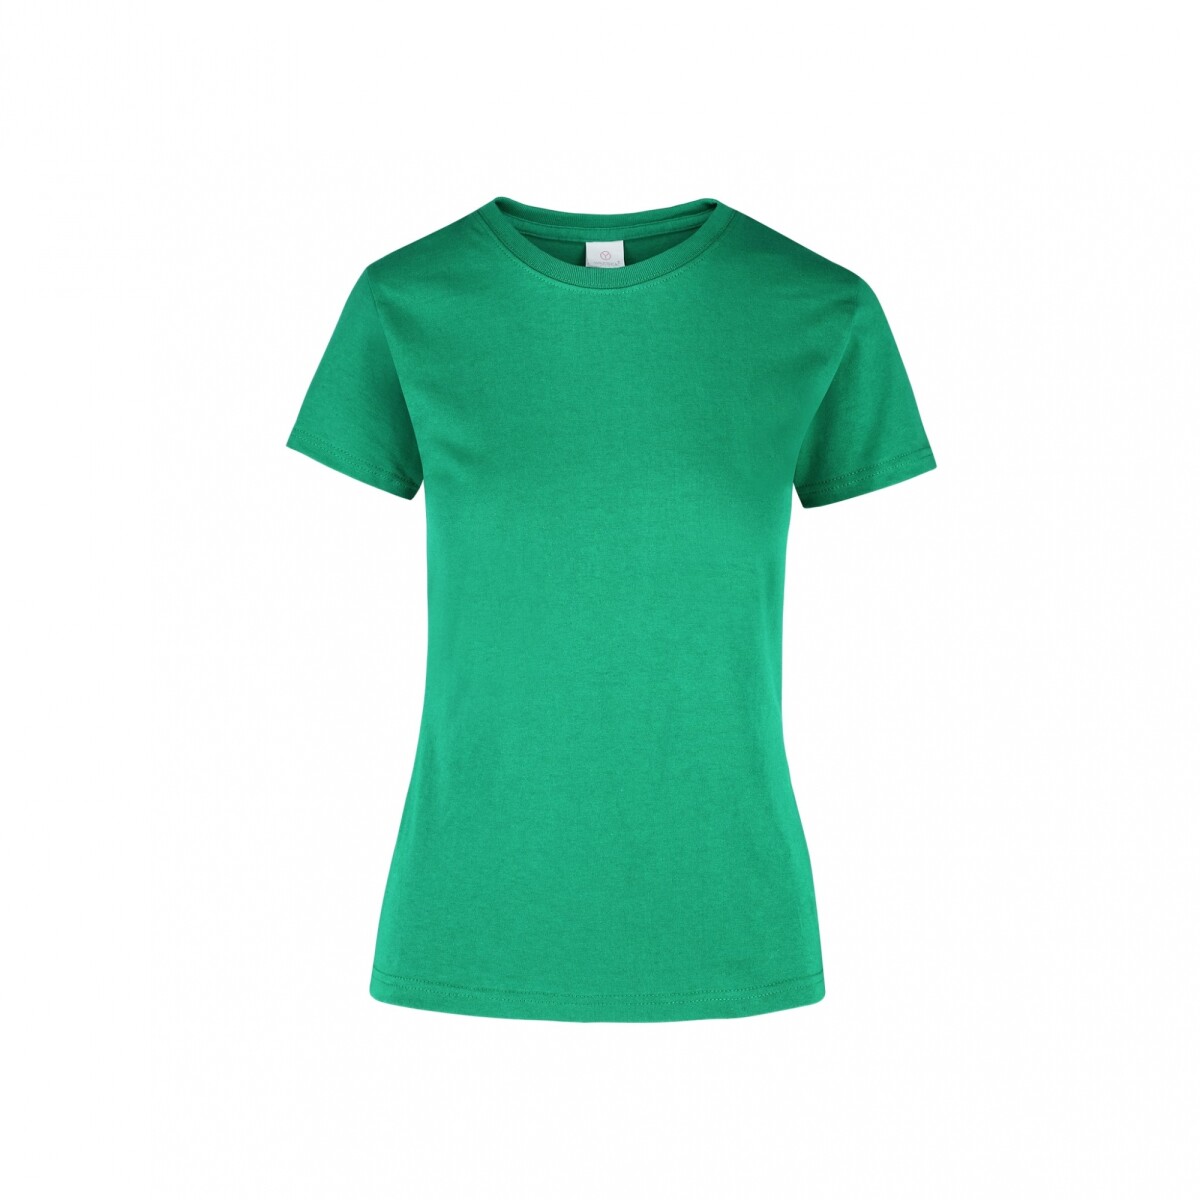 Camiseta a la base dama - Verde jade 